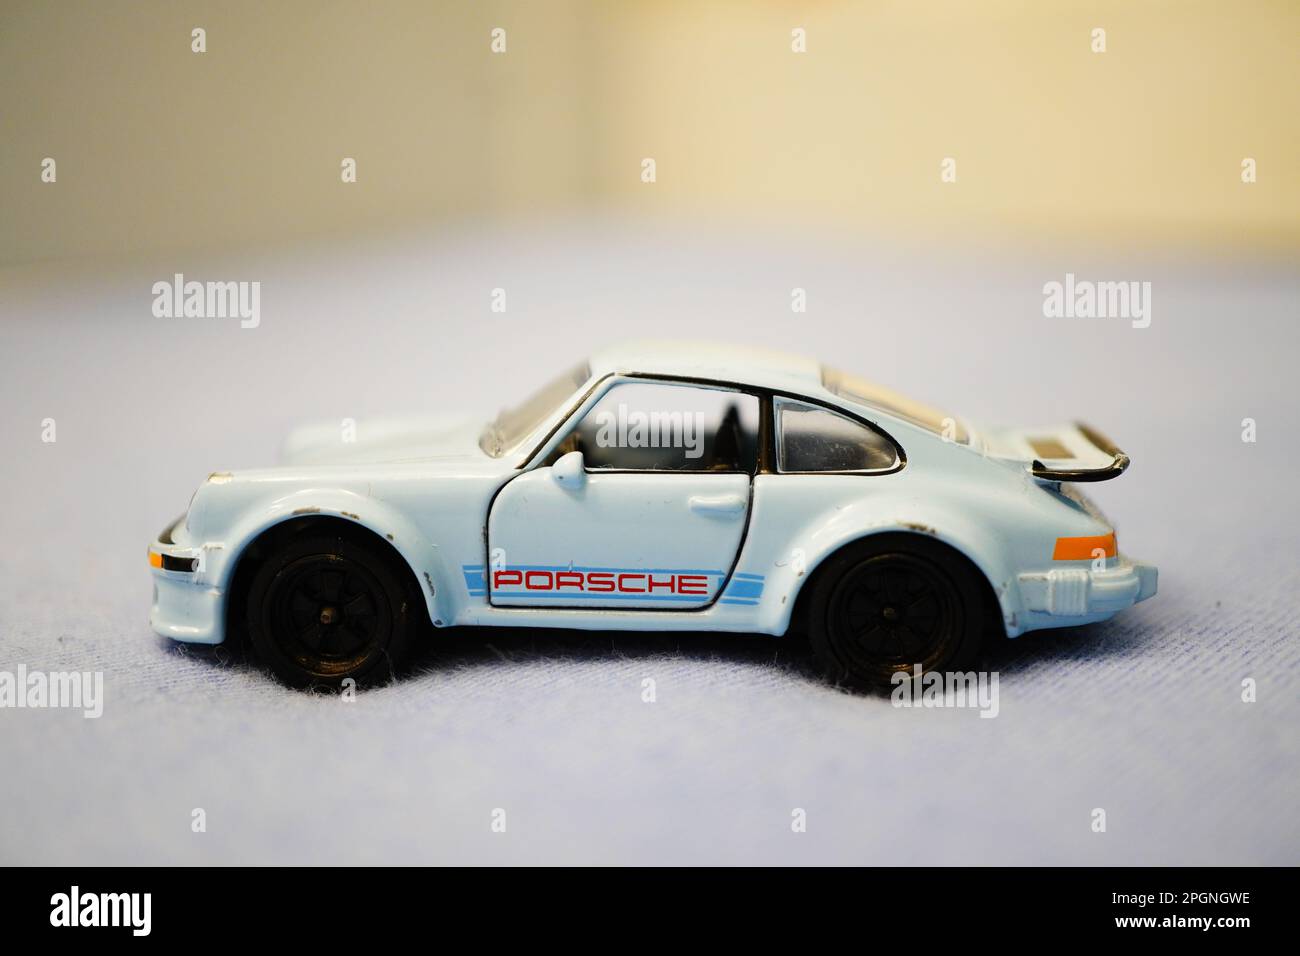 A toy Porsche car resting on a blue bedsheet Stock Photo - Alamy